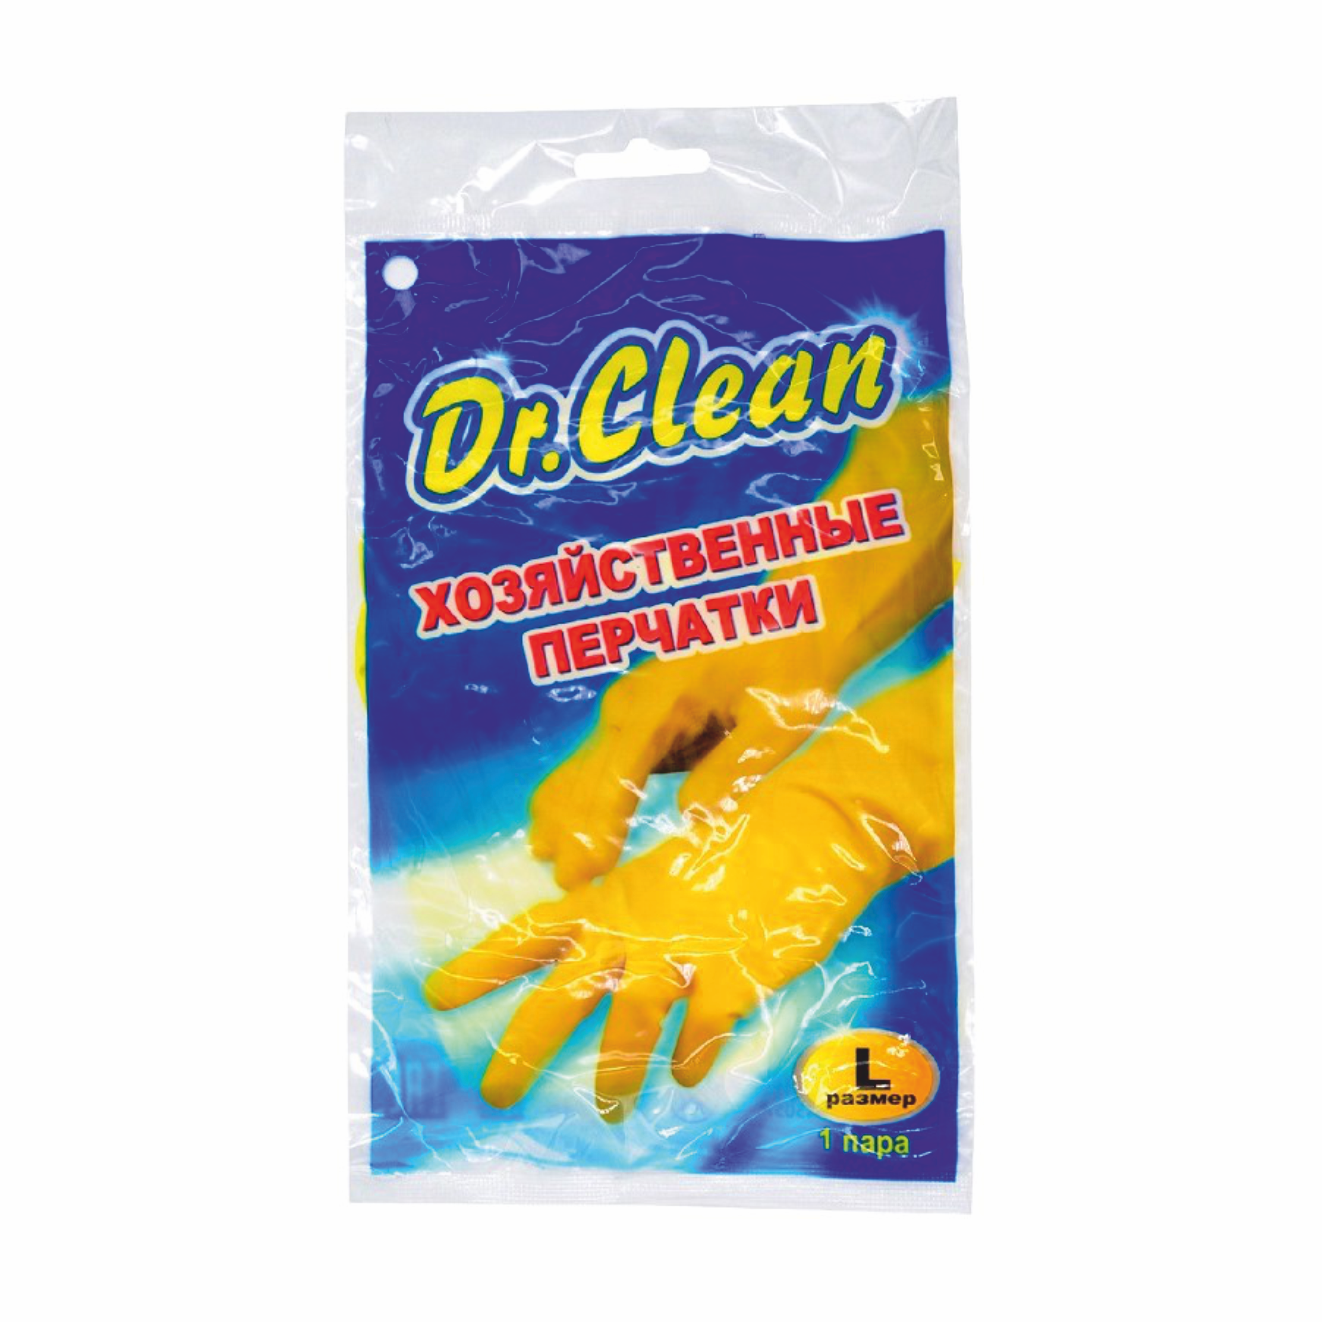 Перчатки хозяйственные латексные DR. CLEAN